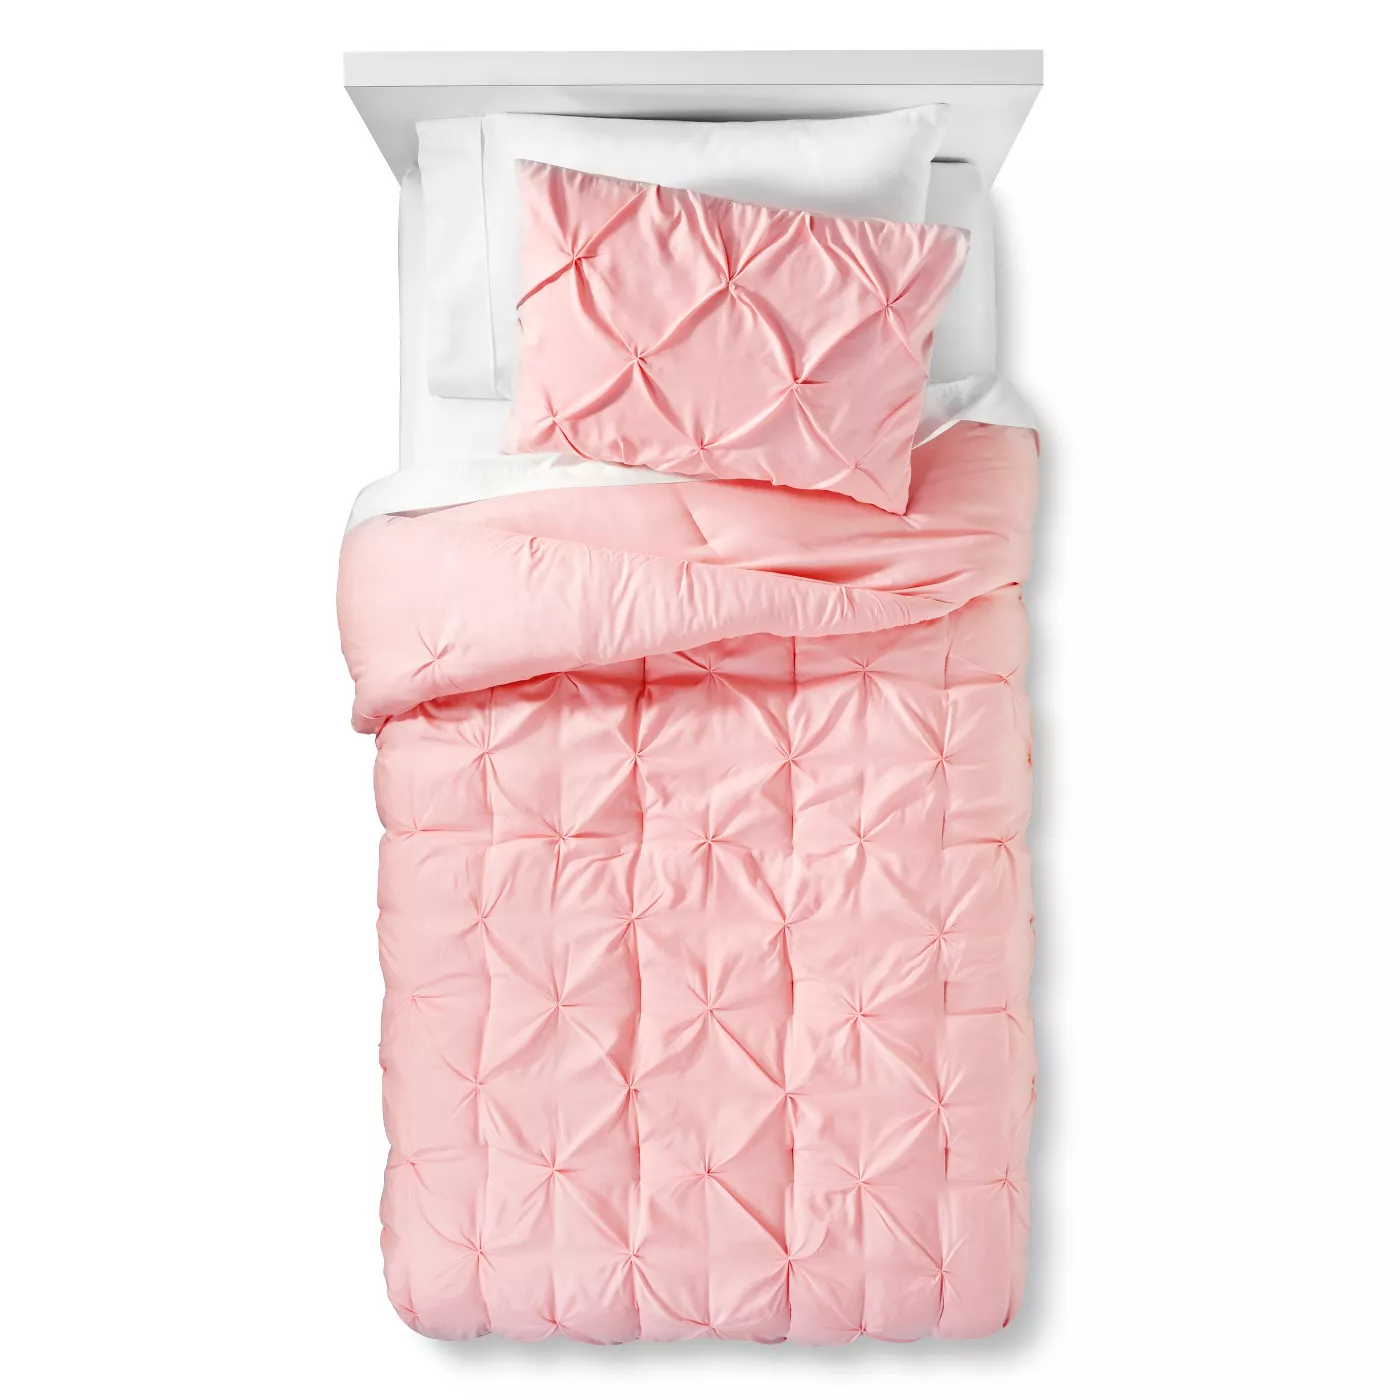 Pinch Pleat Comforter Set - Pillowfort™ - image 1 of 8